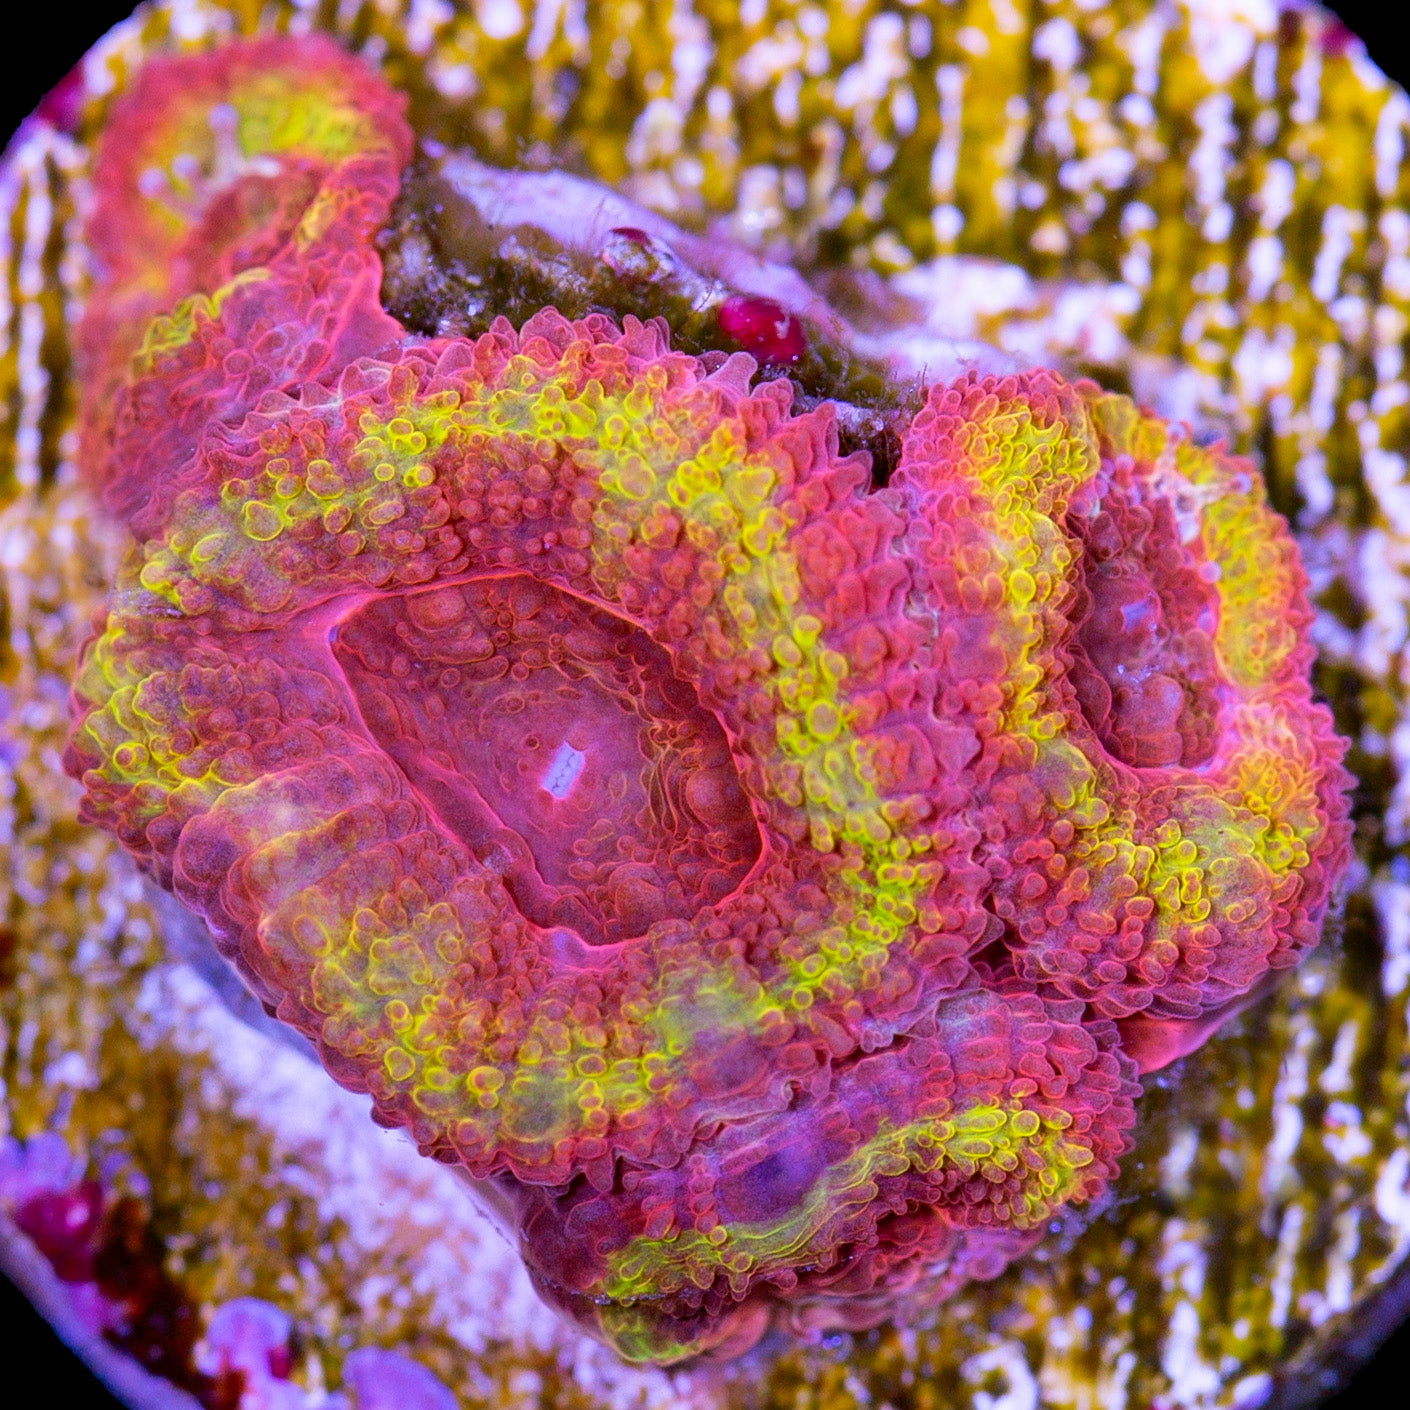 Iron Man Micromussa Coral